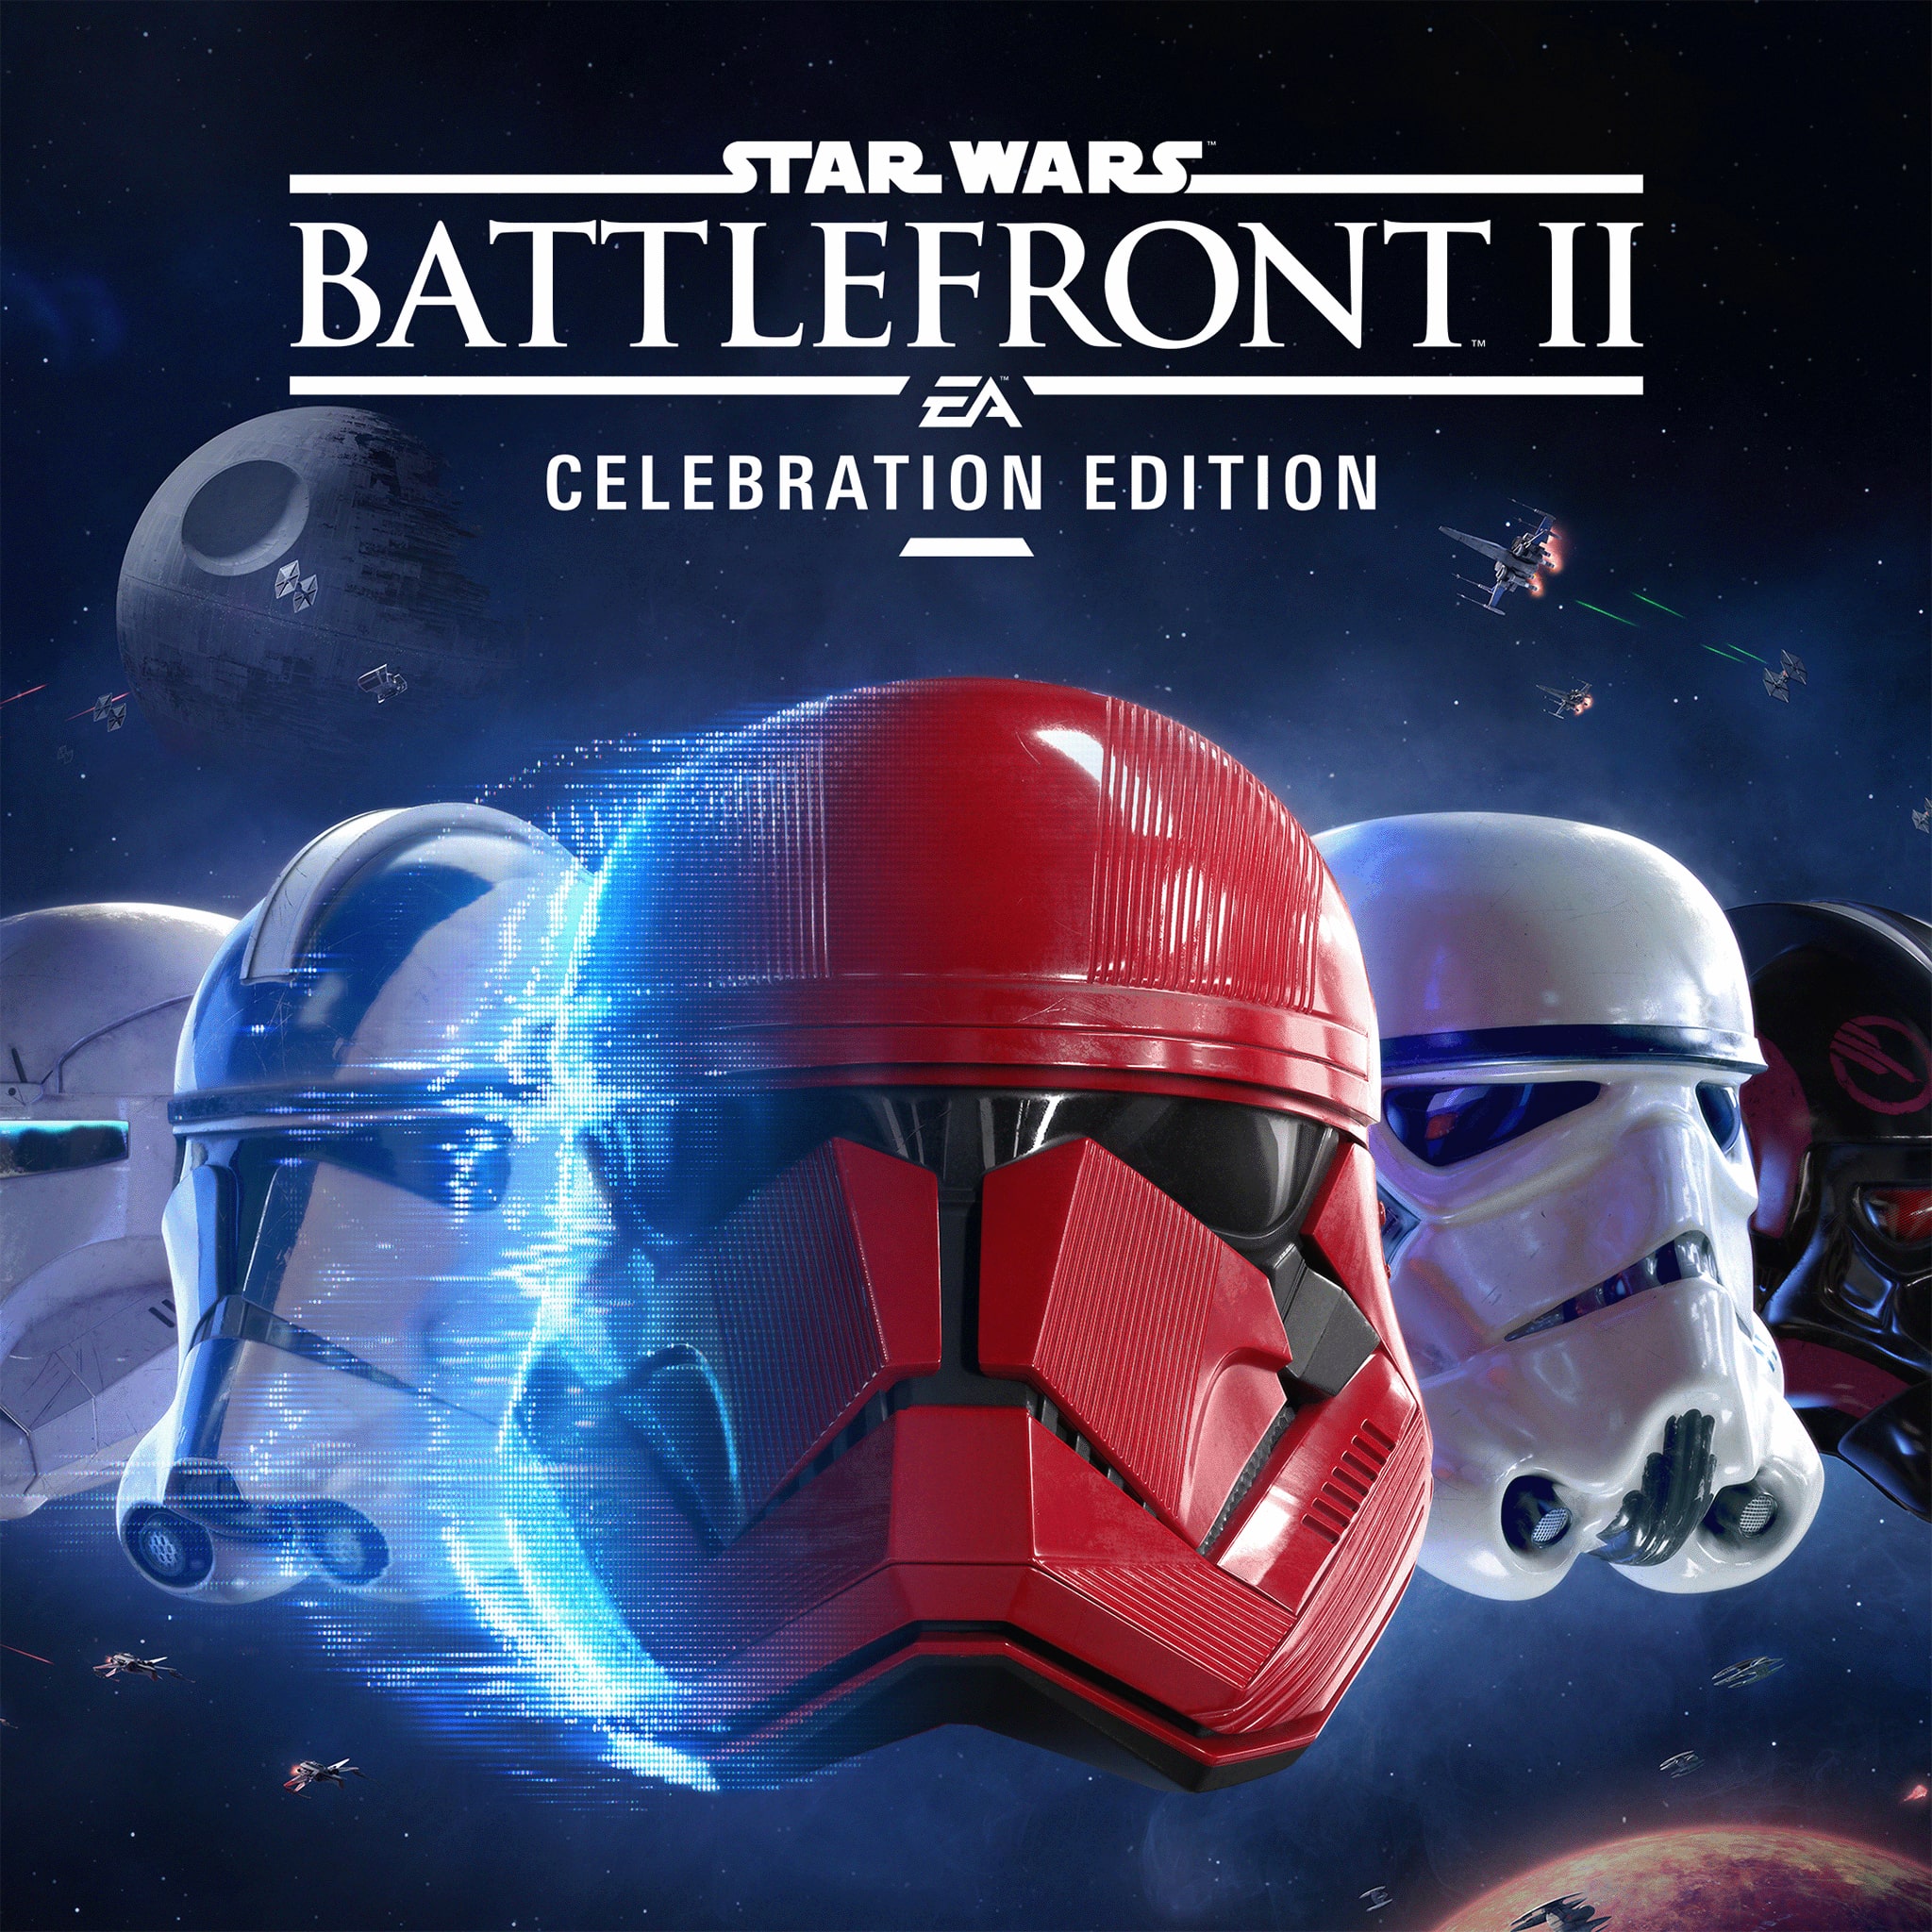 STAR WARS™ Battlefront™ II: Celebration Edition